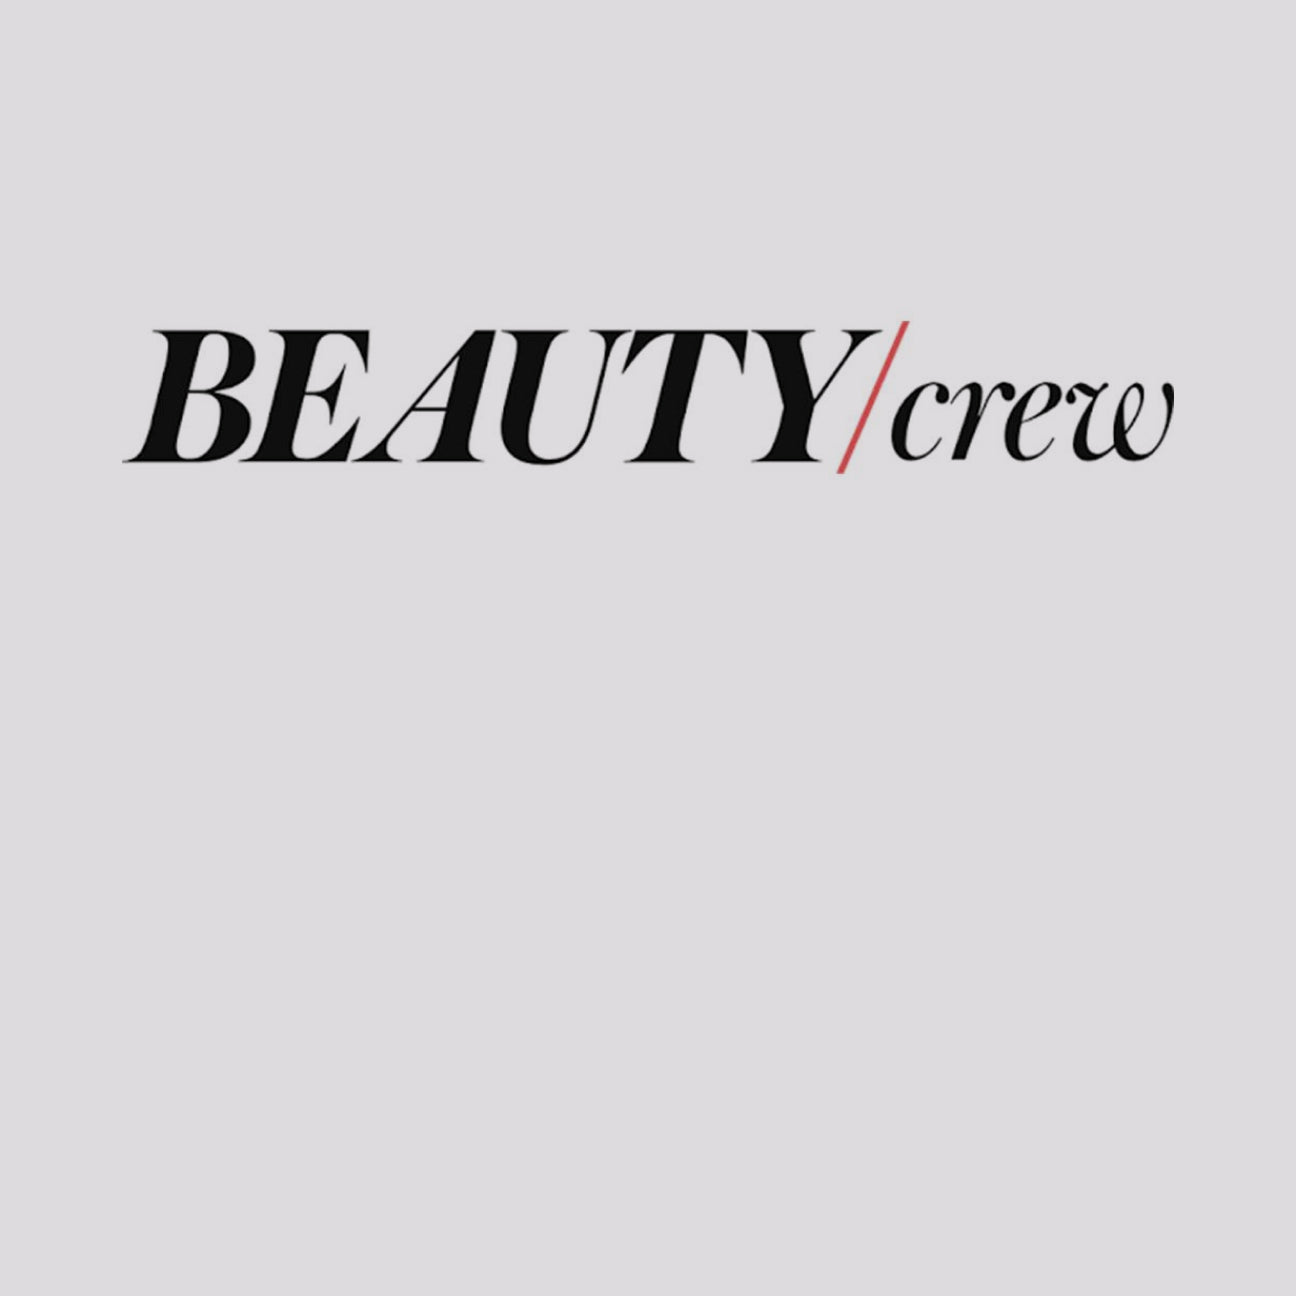 Beauty crew Logo